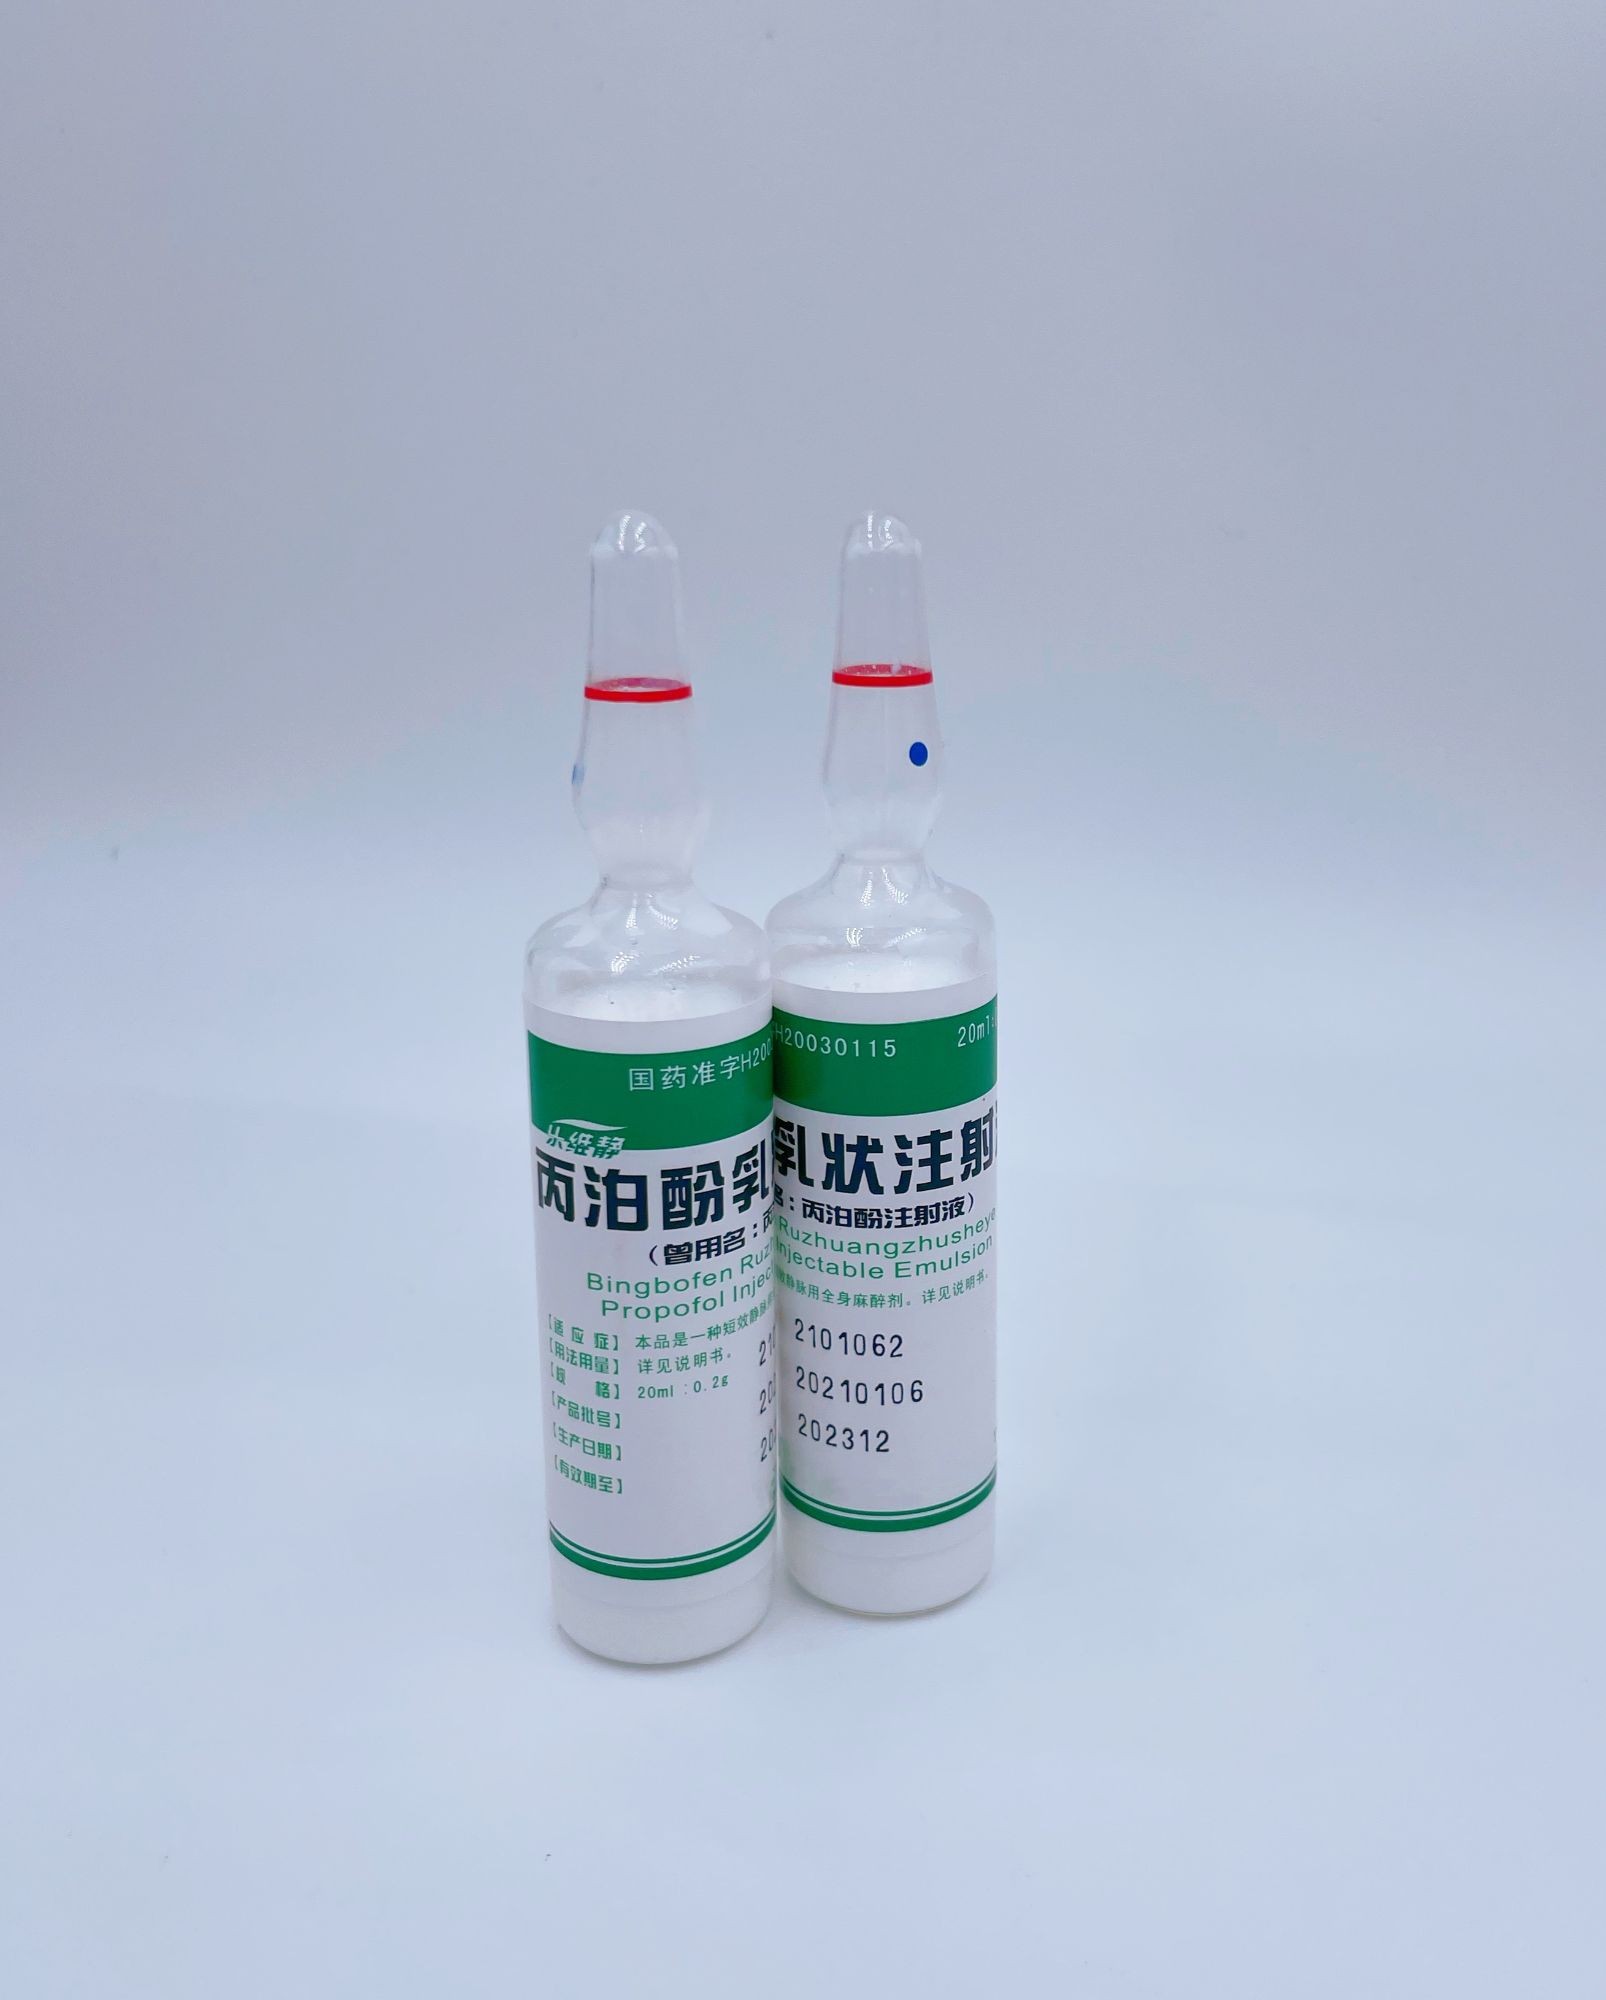 0.2 g/20 ml 1 % Propofol injizierbare Emulsion